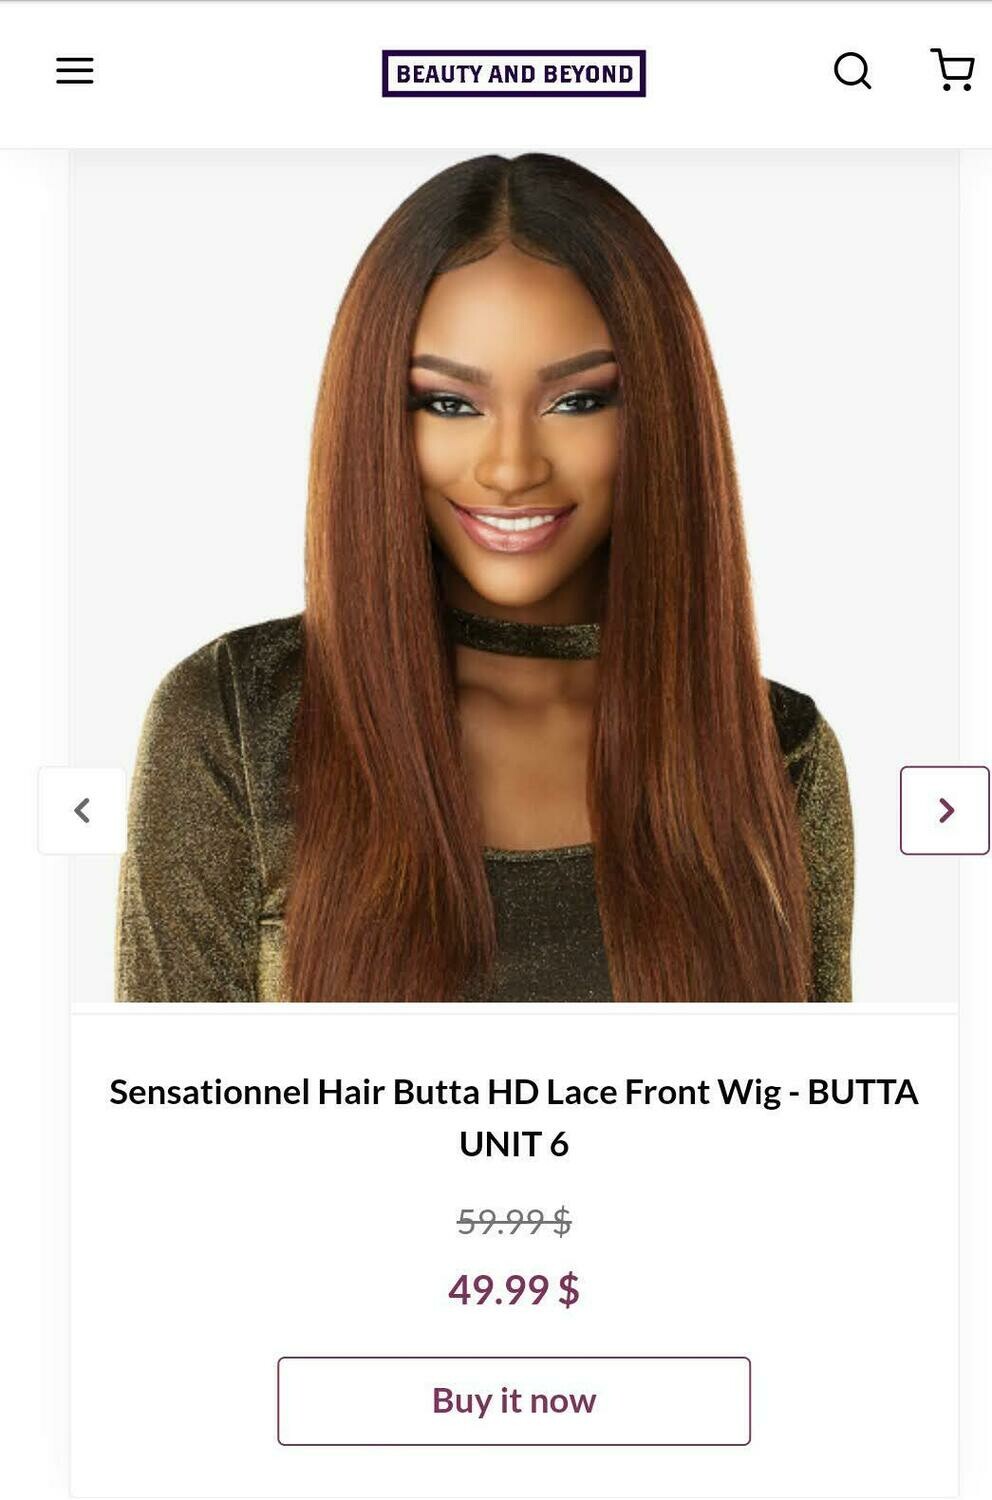 Sensational Hair Butta HD Lace front Wig- BUTTA UNIT 6